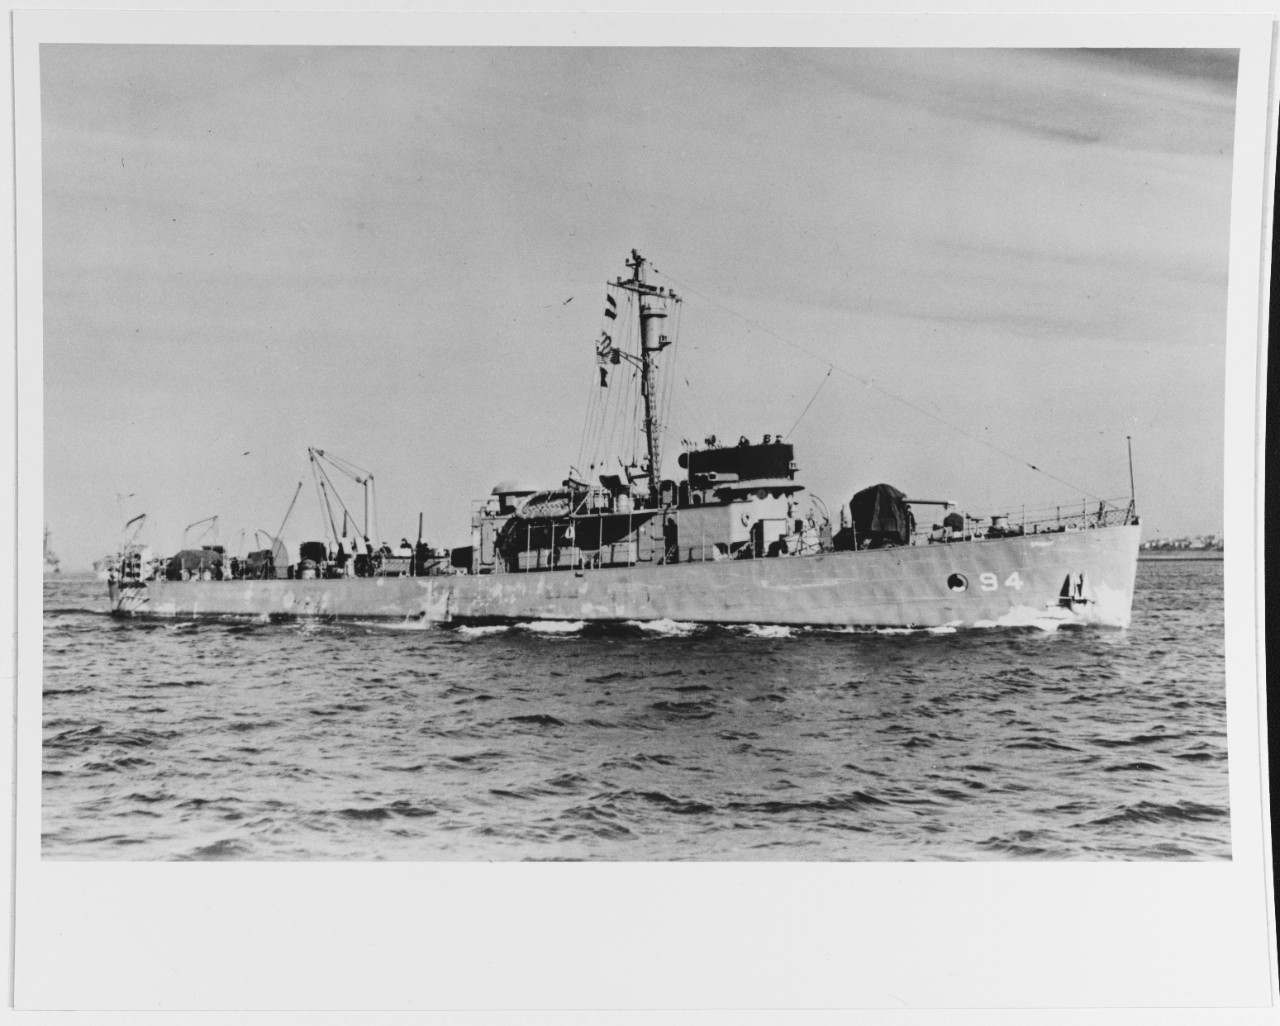 USS EXCEL (AM-94)